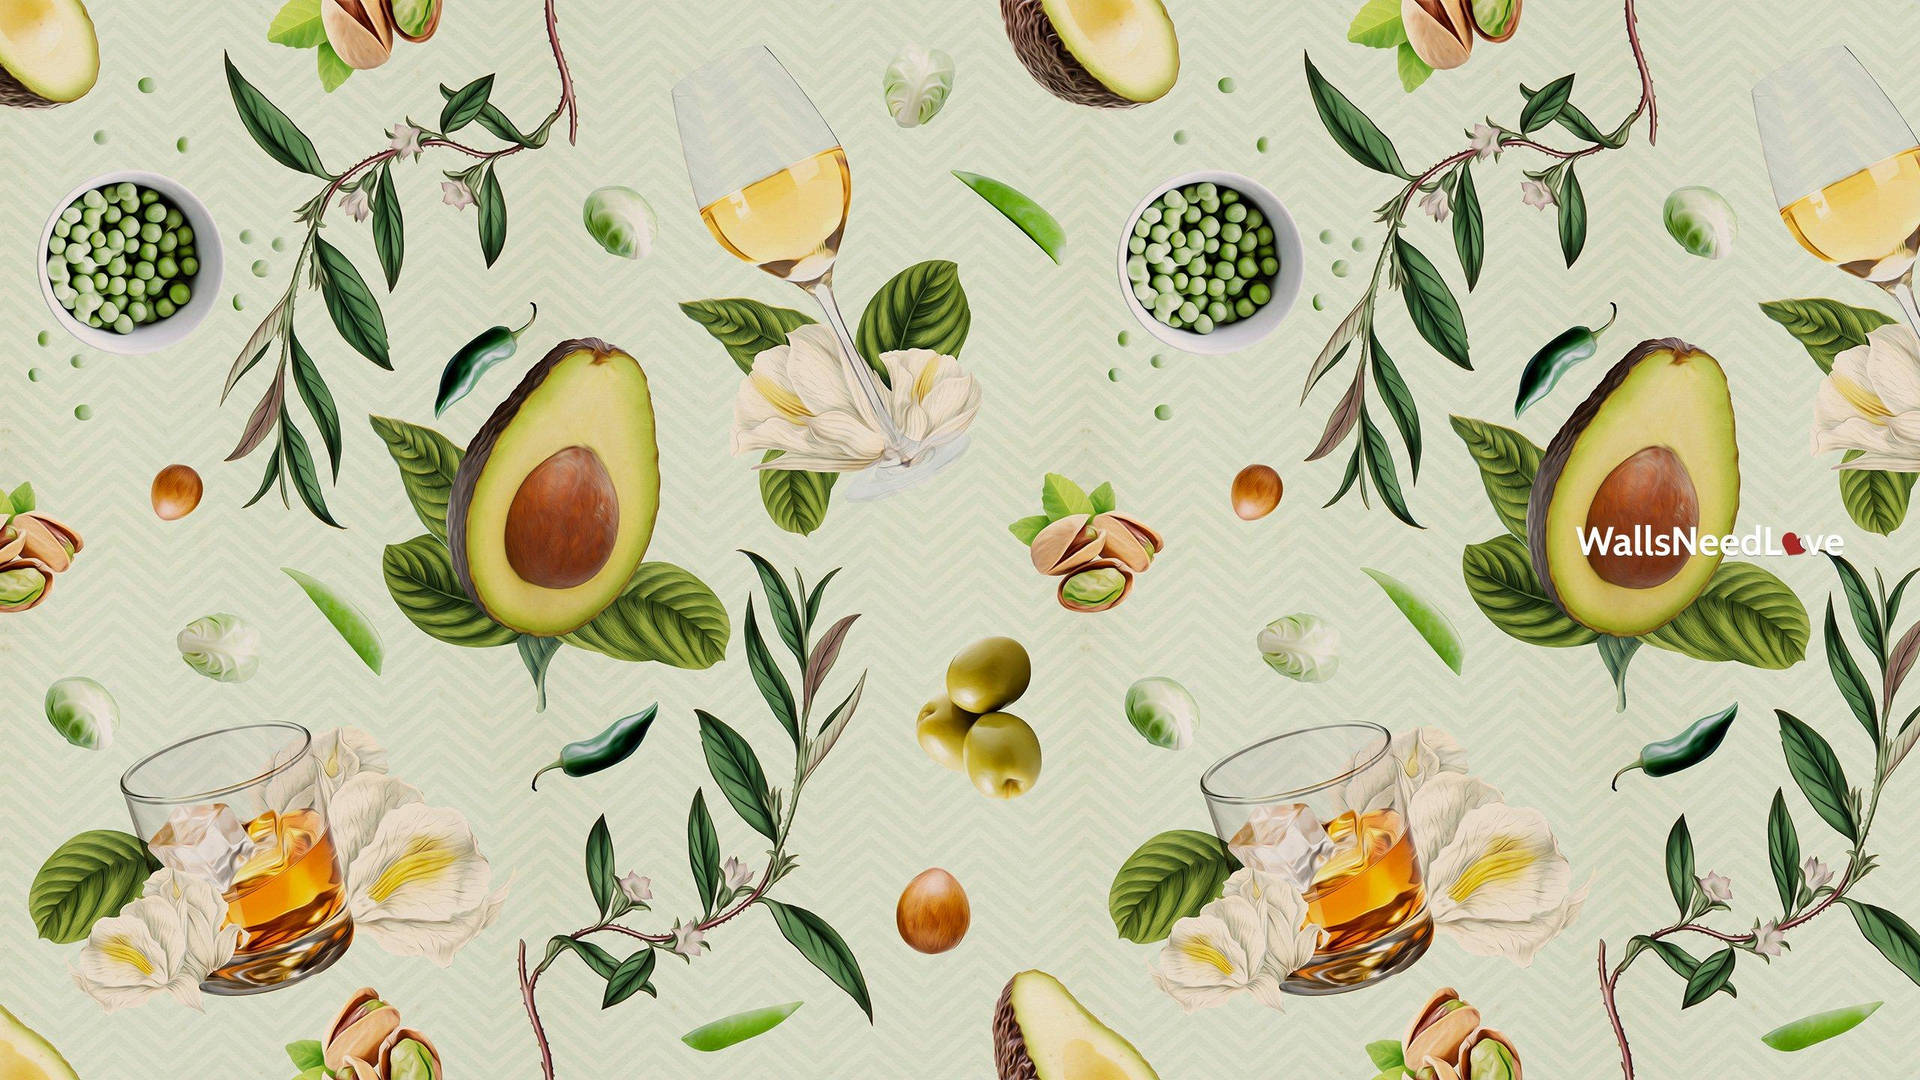 Aesthetic Avocado Fruit Patterned Digital Illustration Picture